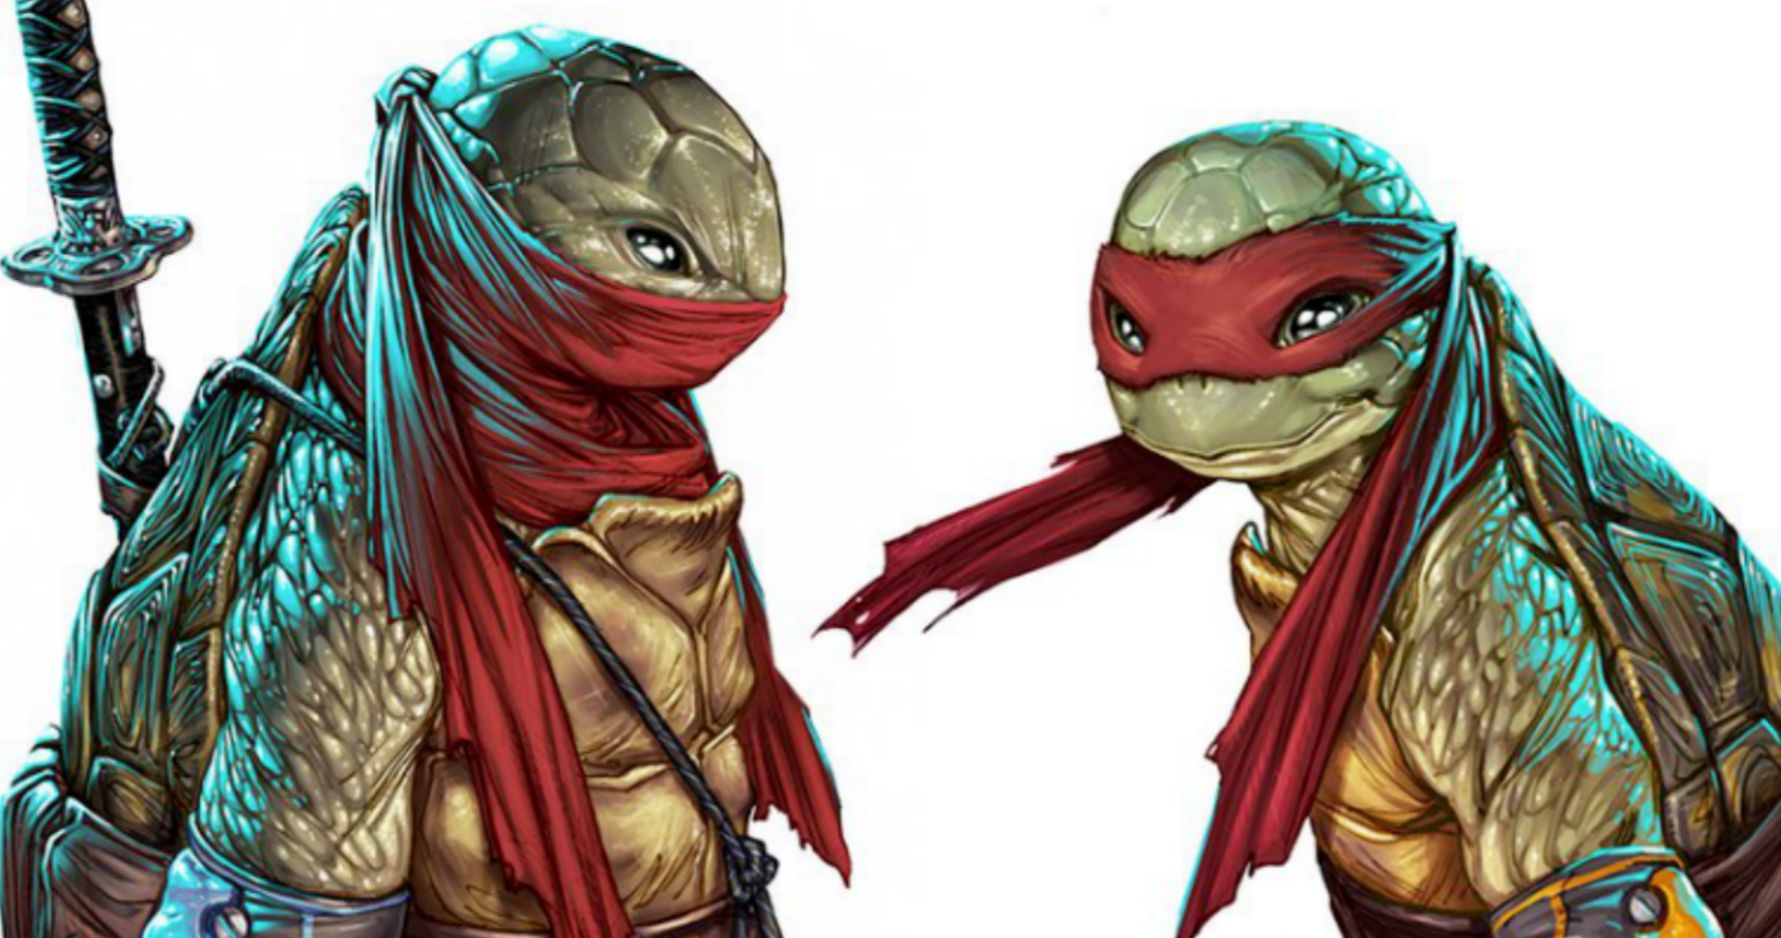 Teenage Mutant Ninja Turtles Concept Art Reveals a PG-13 Rated Netflix Pitch